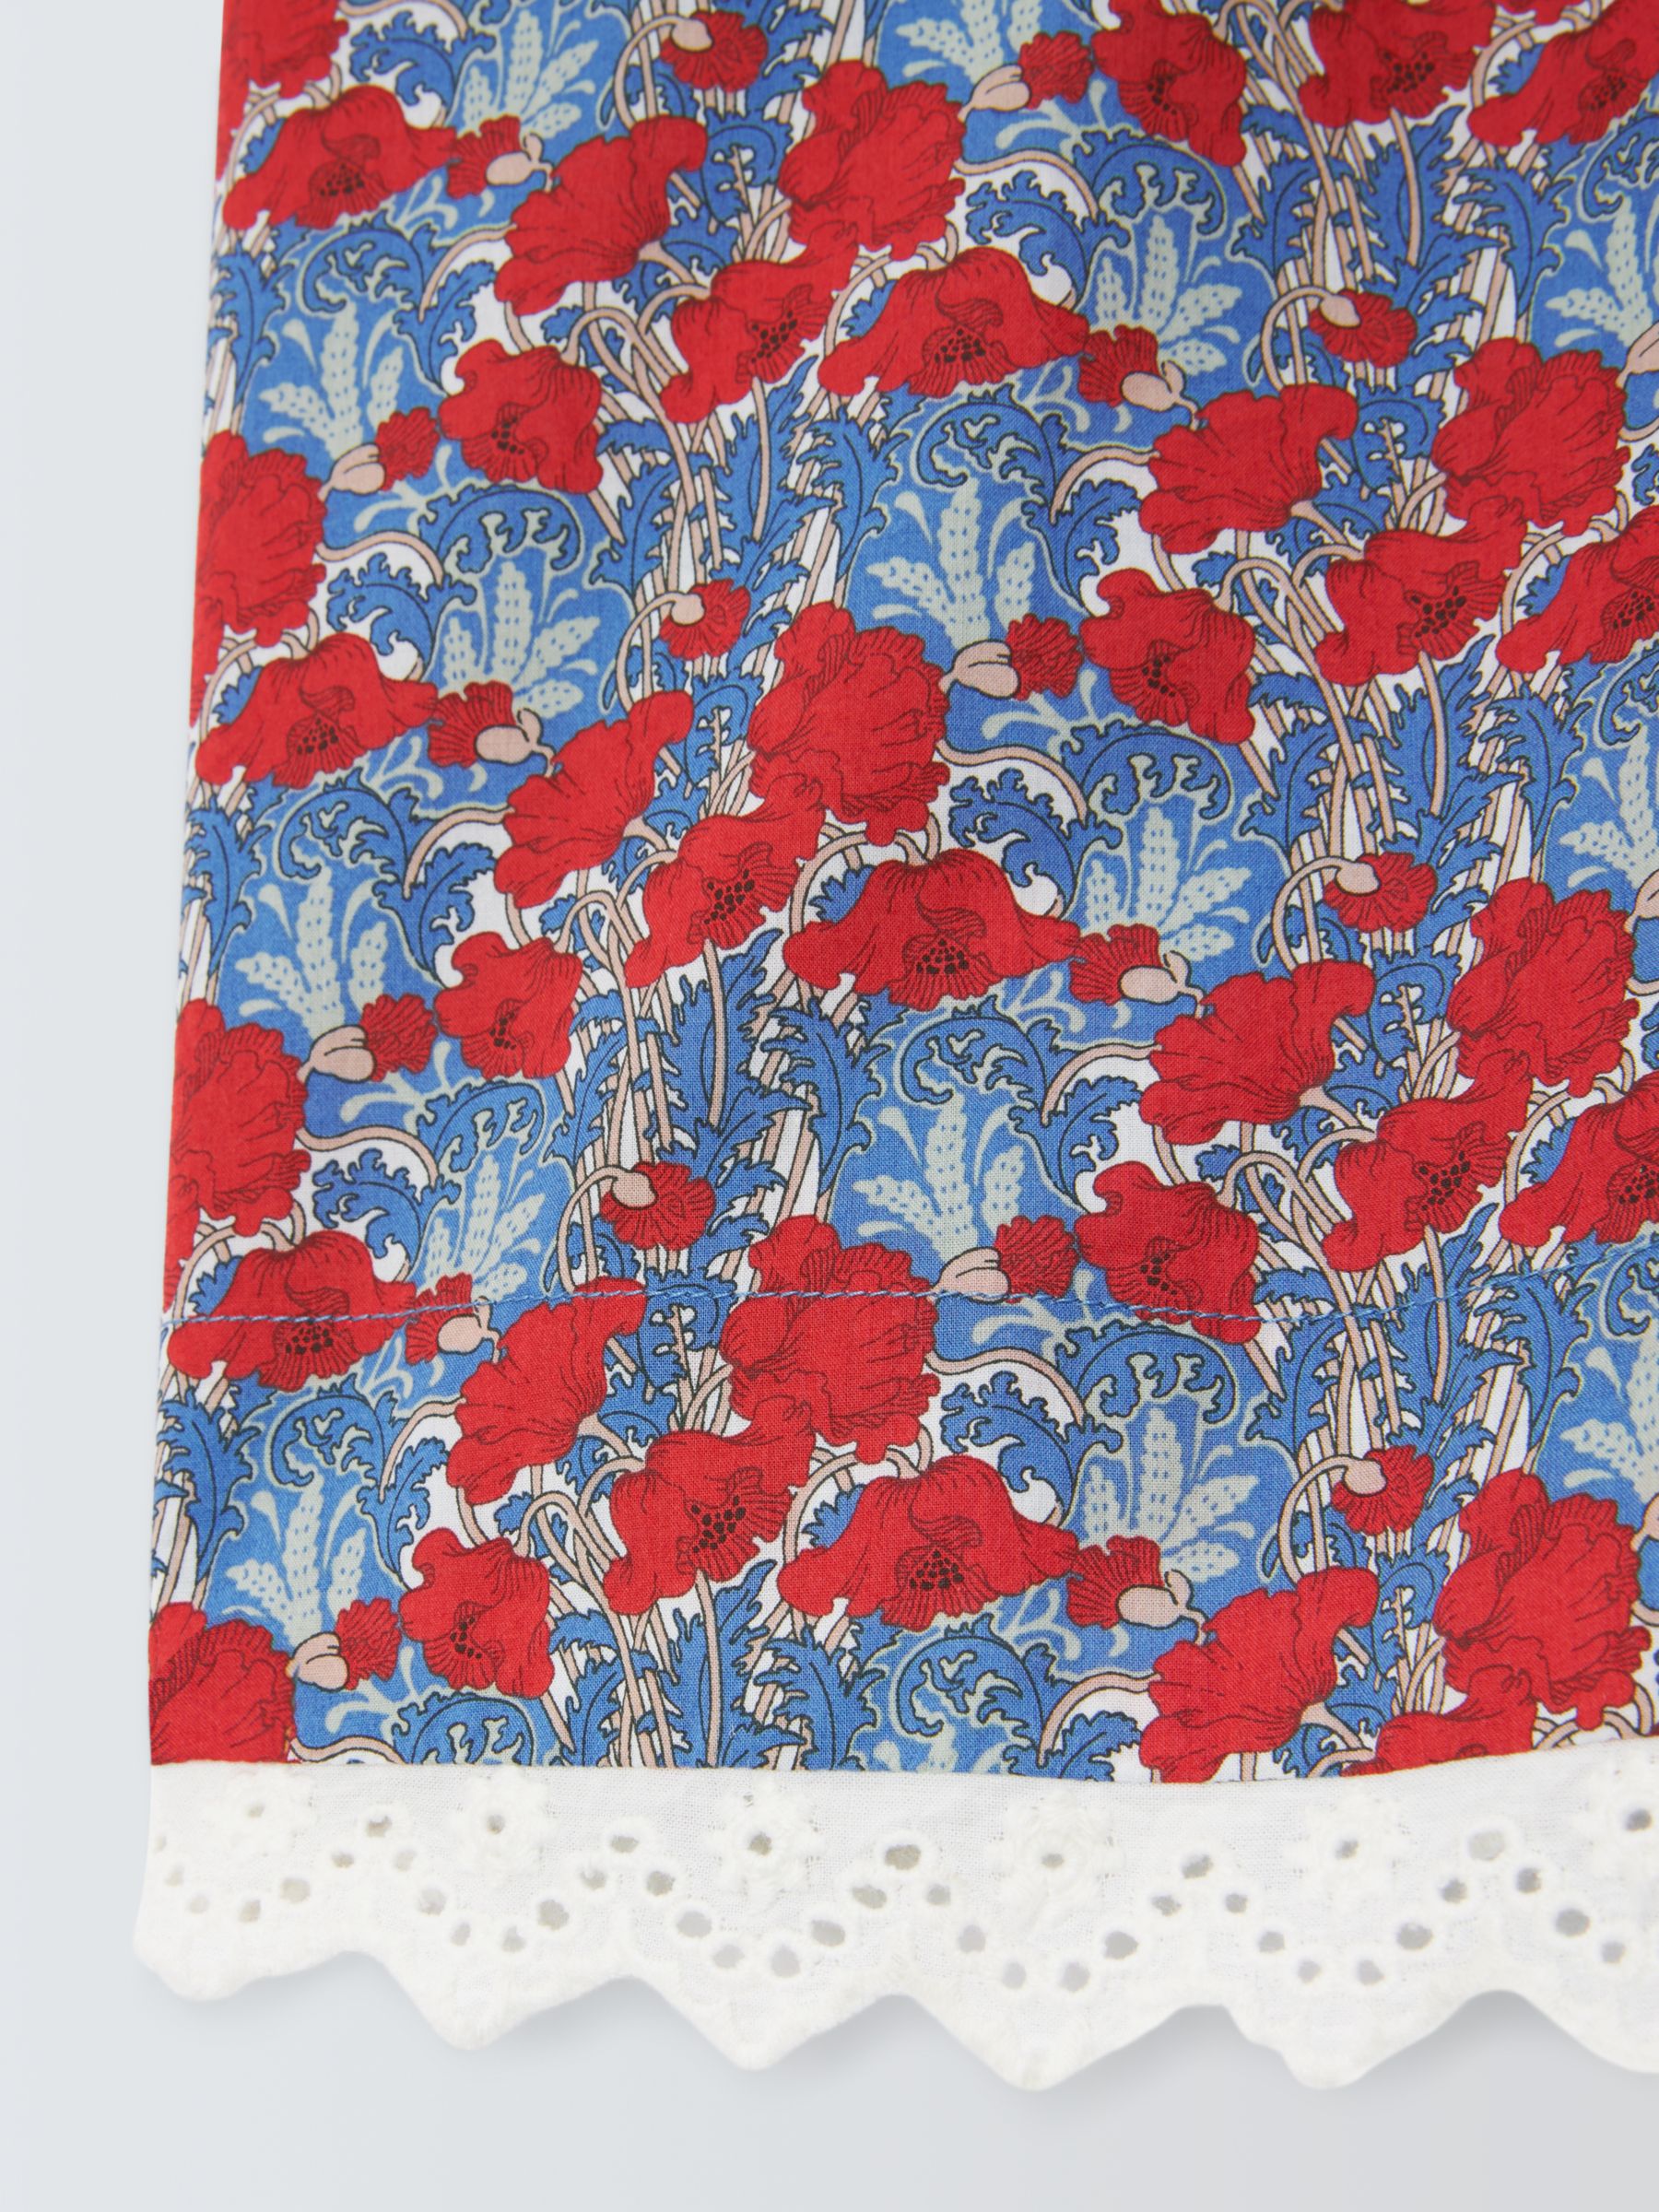 Caramel Kids' Malika Floral Liberty Print Dress, Blue/Multi, 8 years